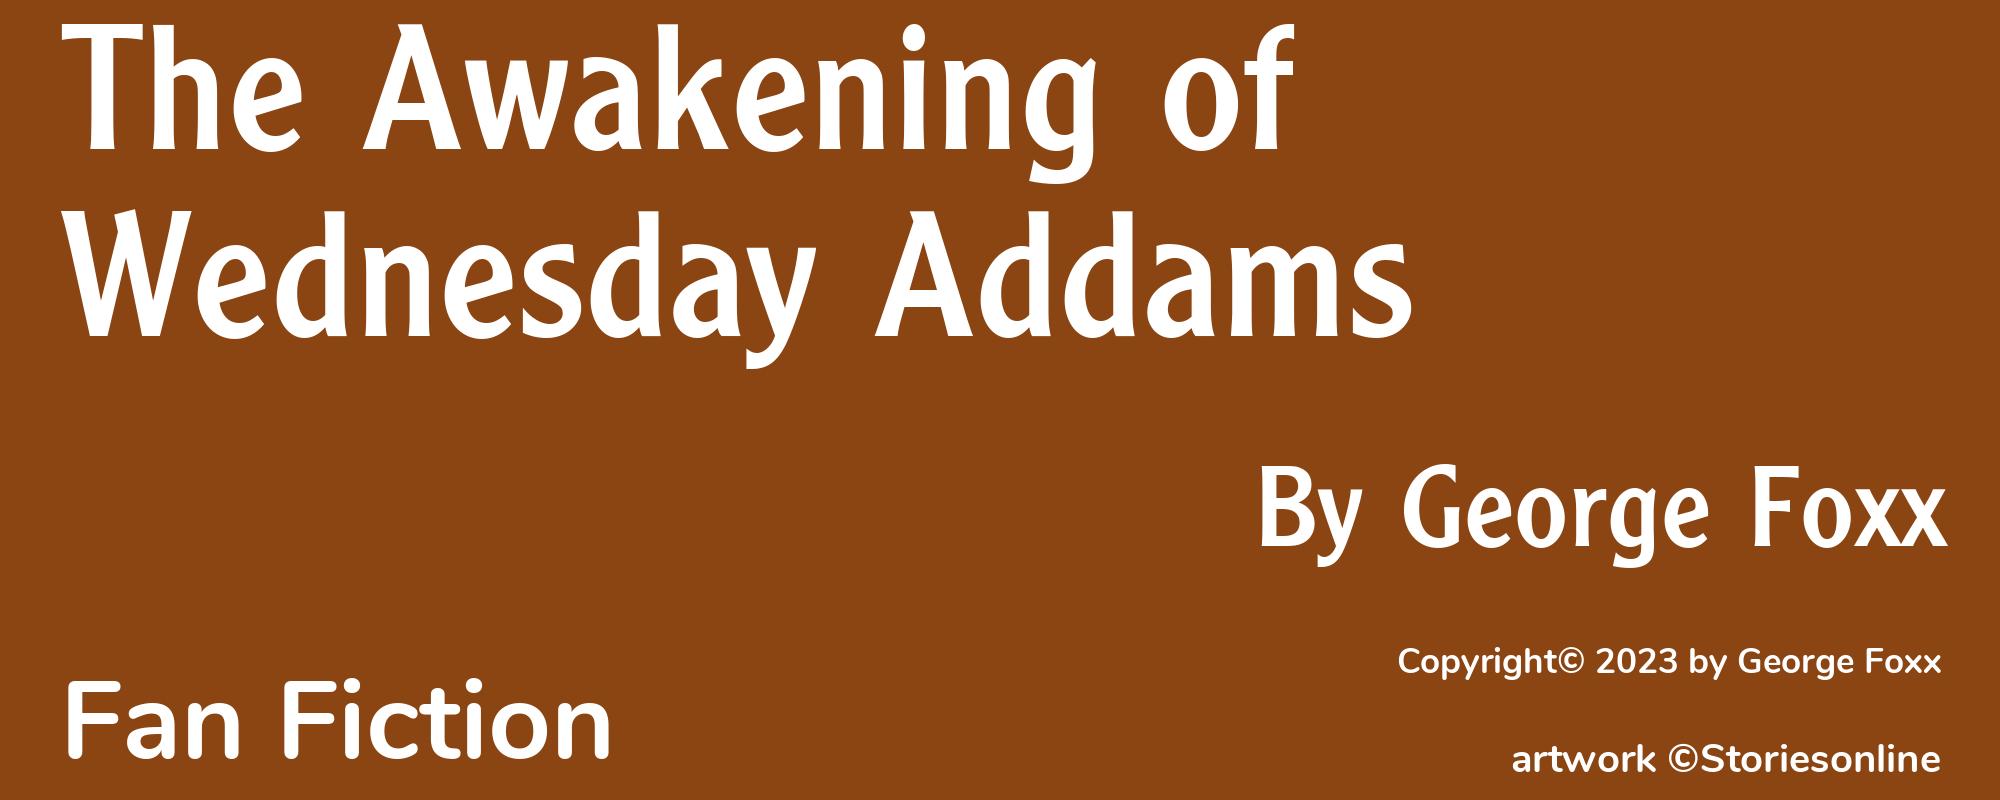 The Awakening of Wednesday Addams - Cover